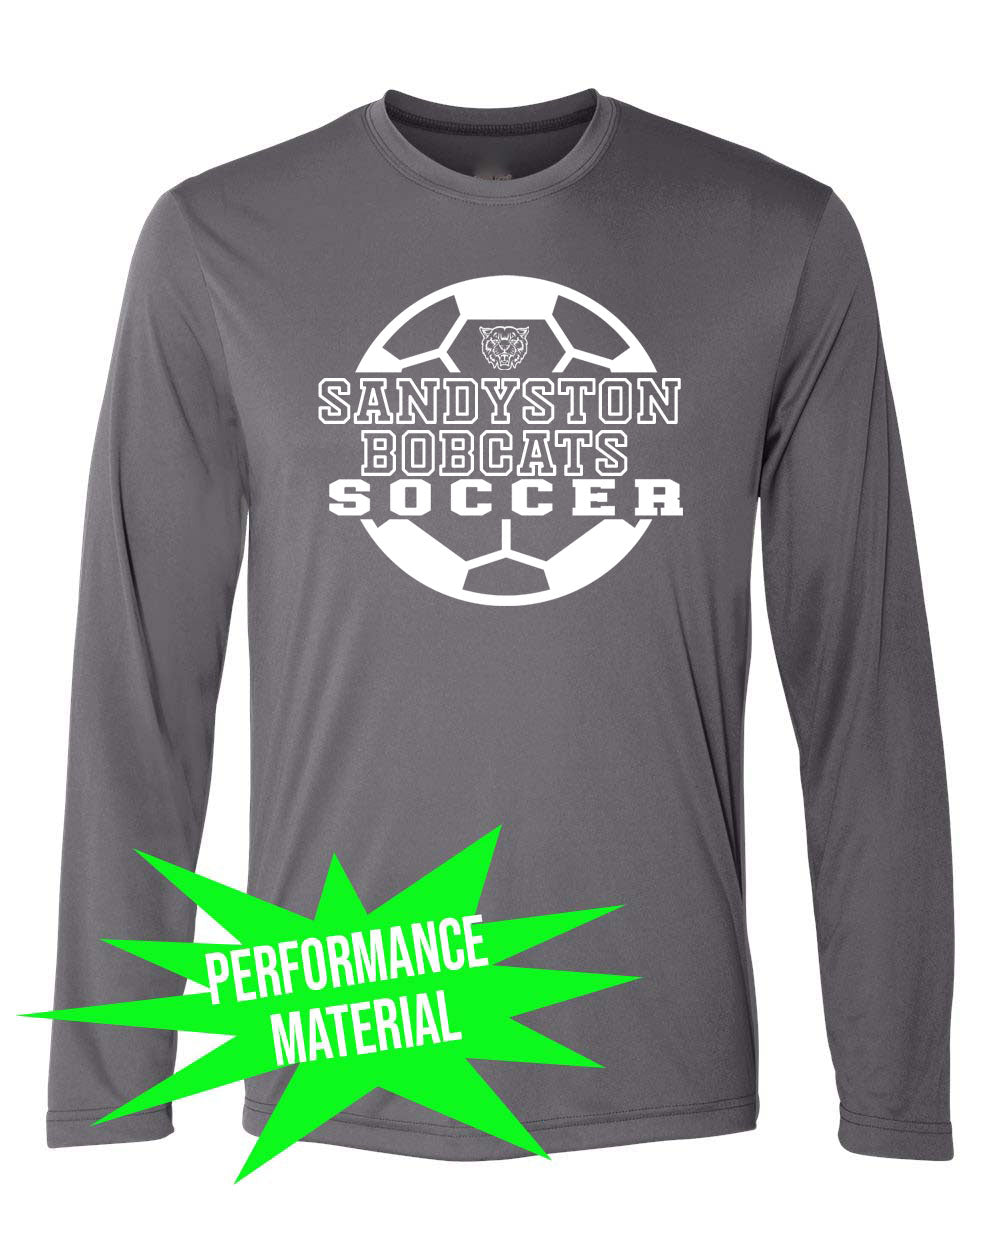 Sandyston Soccer Performance Material Design 2 Long Sleeve Shirt